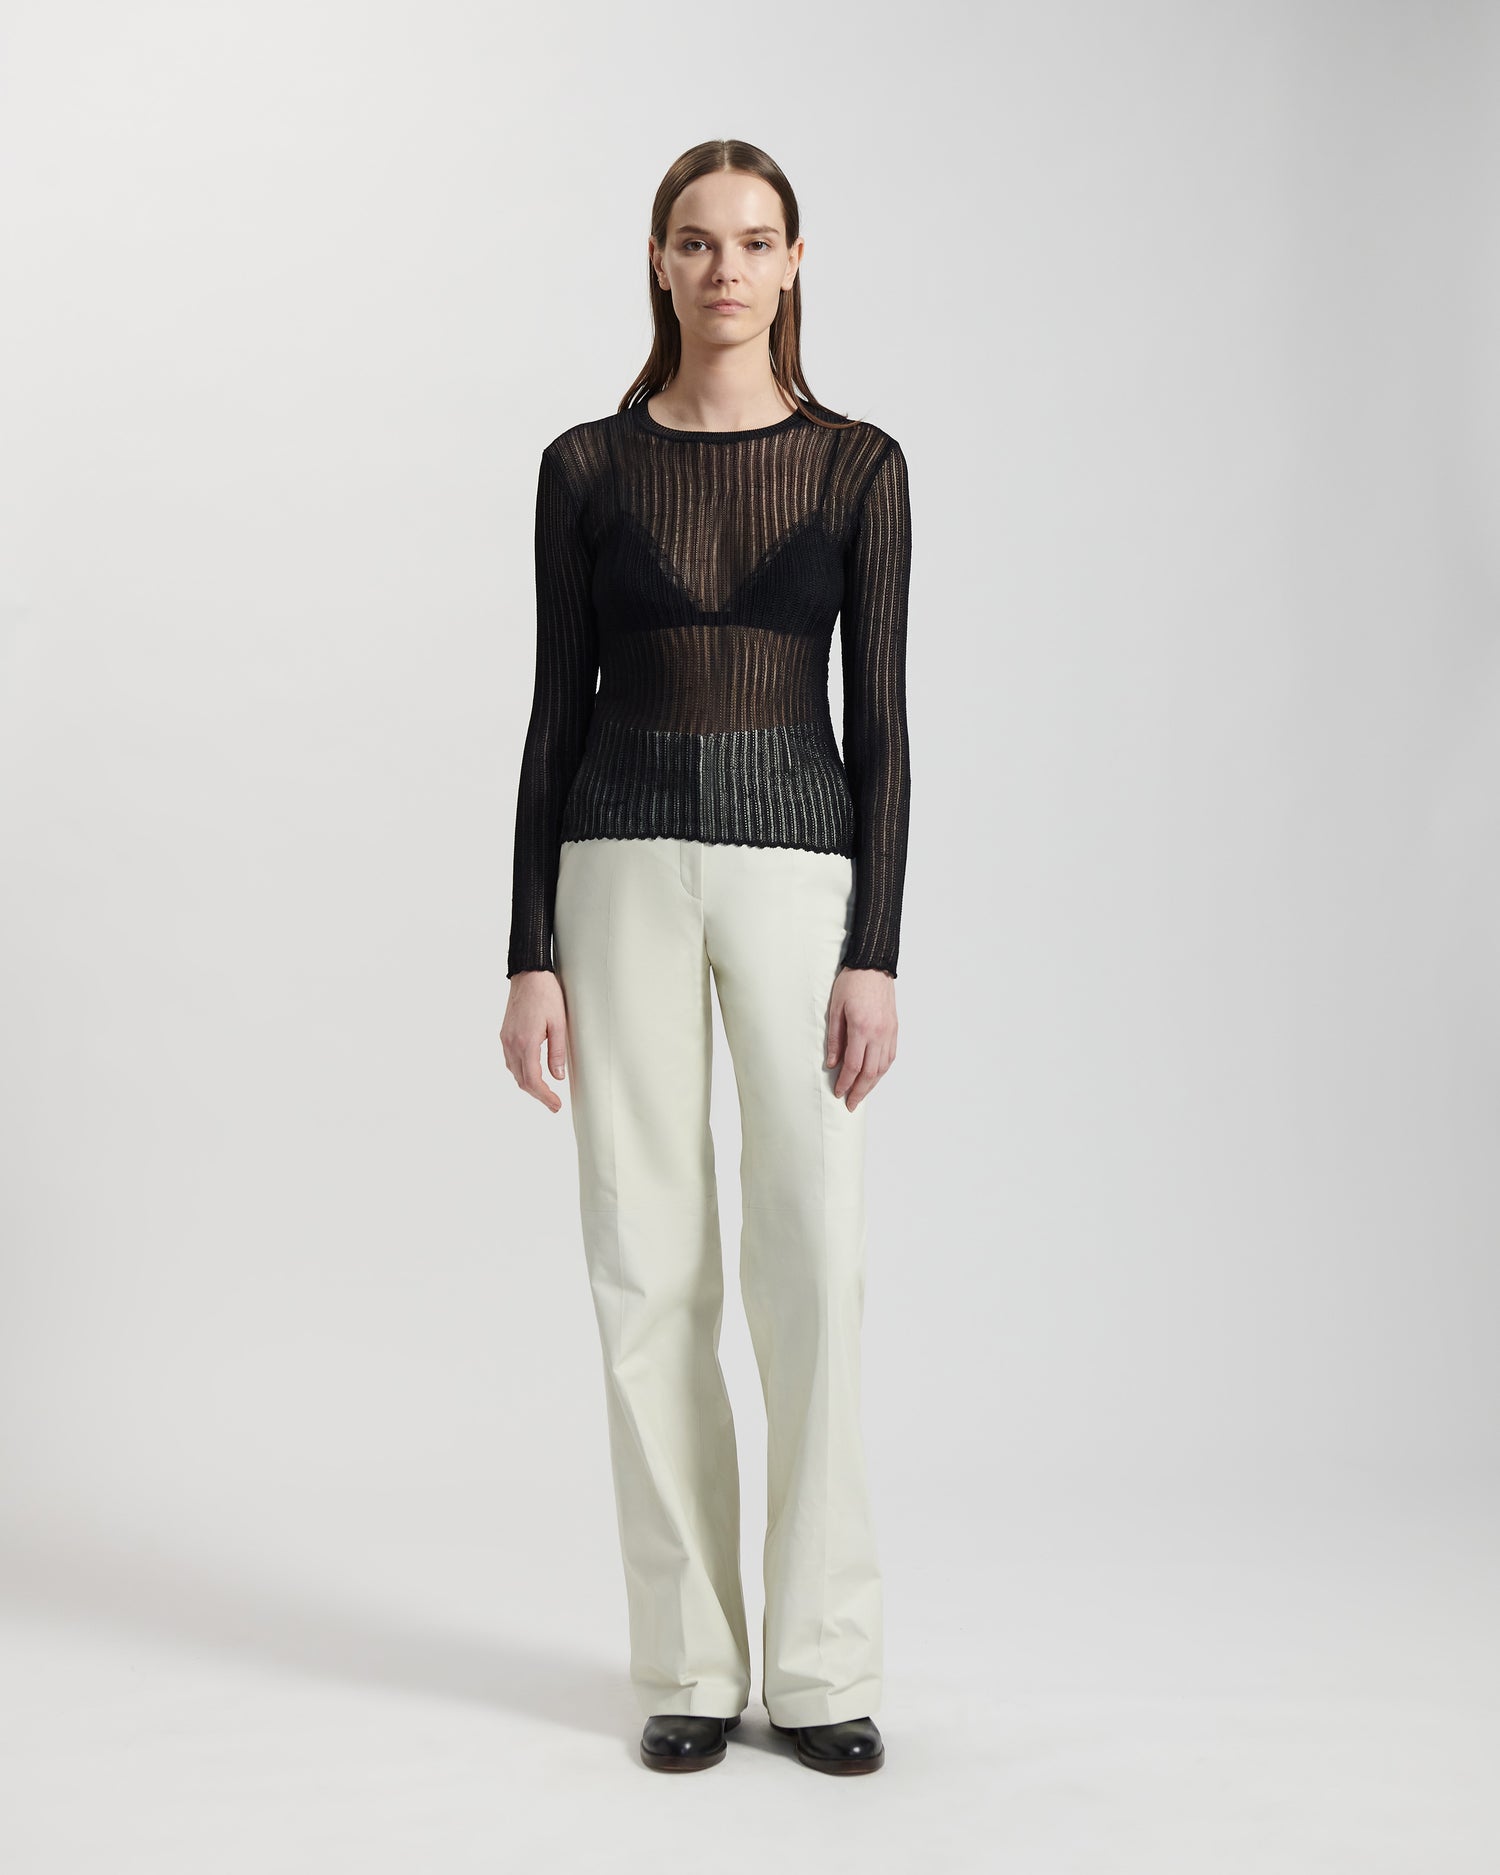 Caroline Sweater in Viscose and Merino Wool, Black